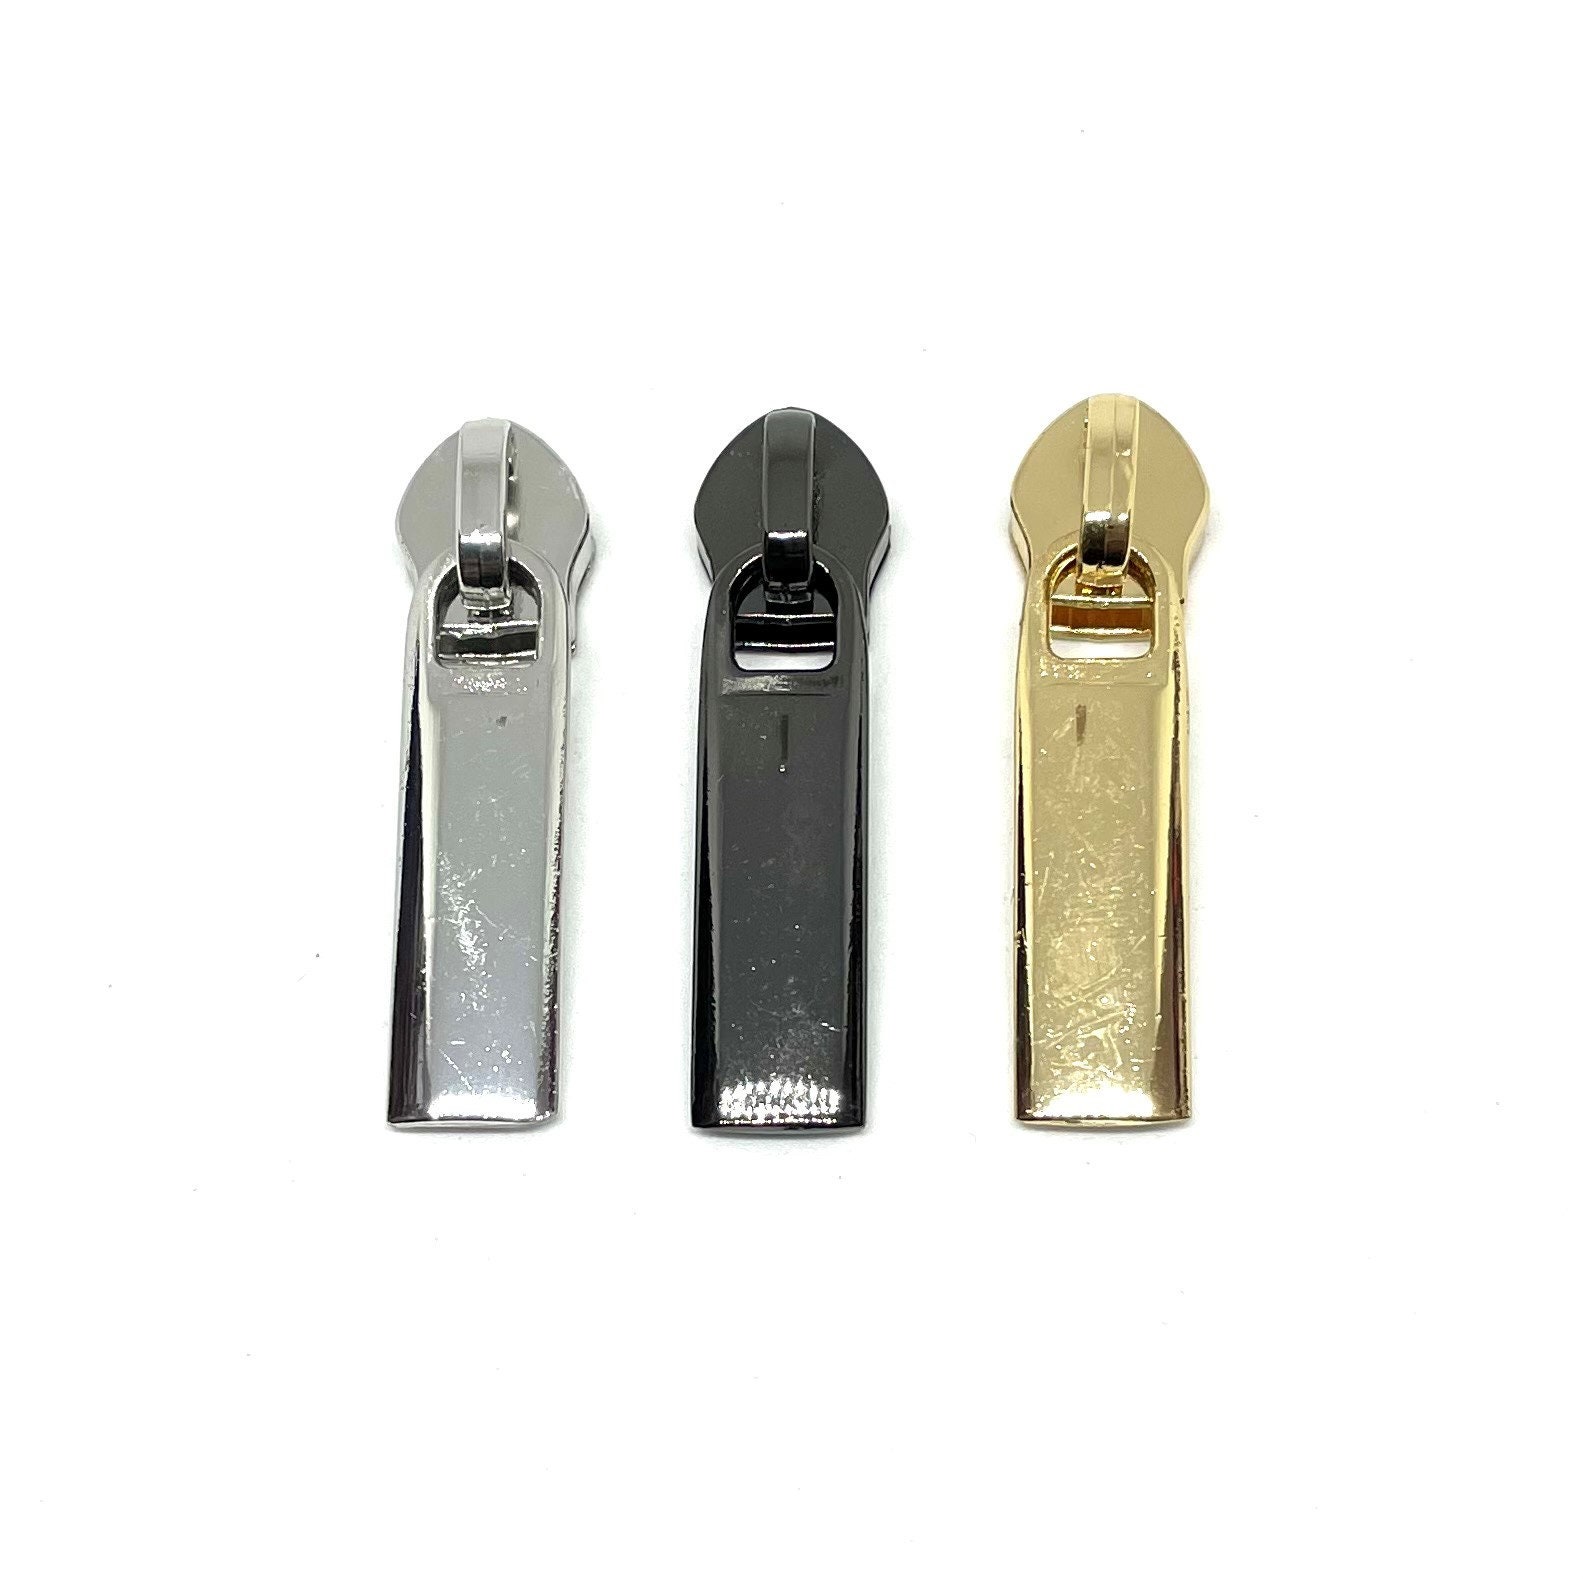 ROSE GOLD Metal Zipper Stopper for 5 Zipper Tape, Zip Stopper for Top and  Bottom, Rose Gold Colour Metal, Zipper Repair, UK Shop 